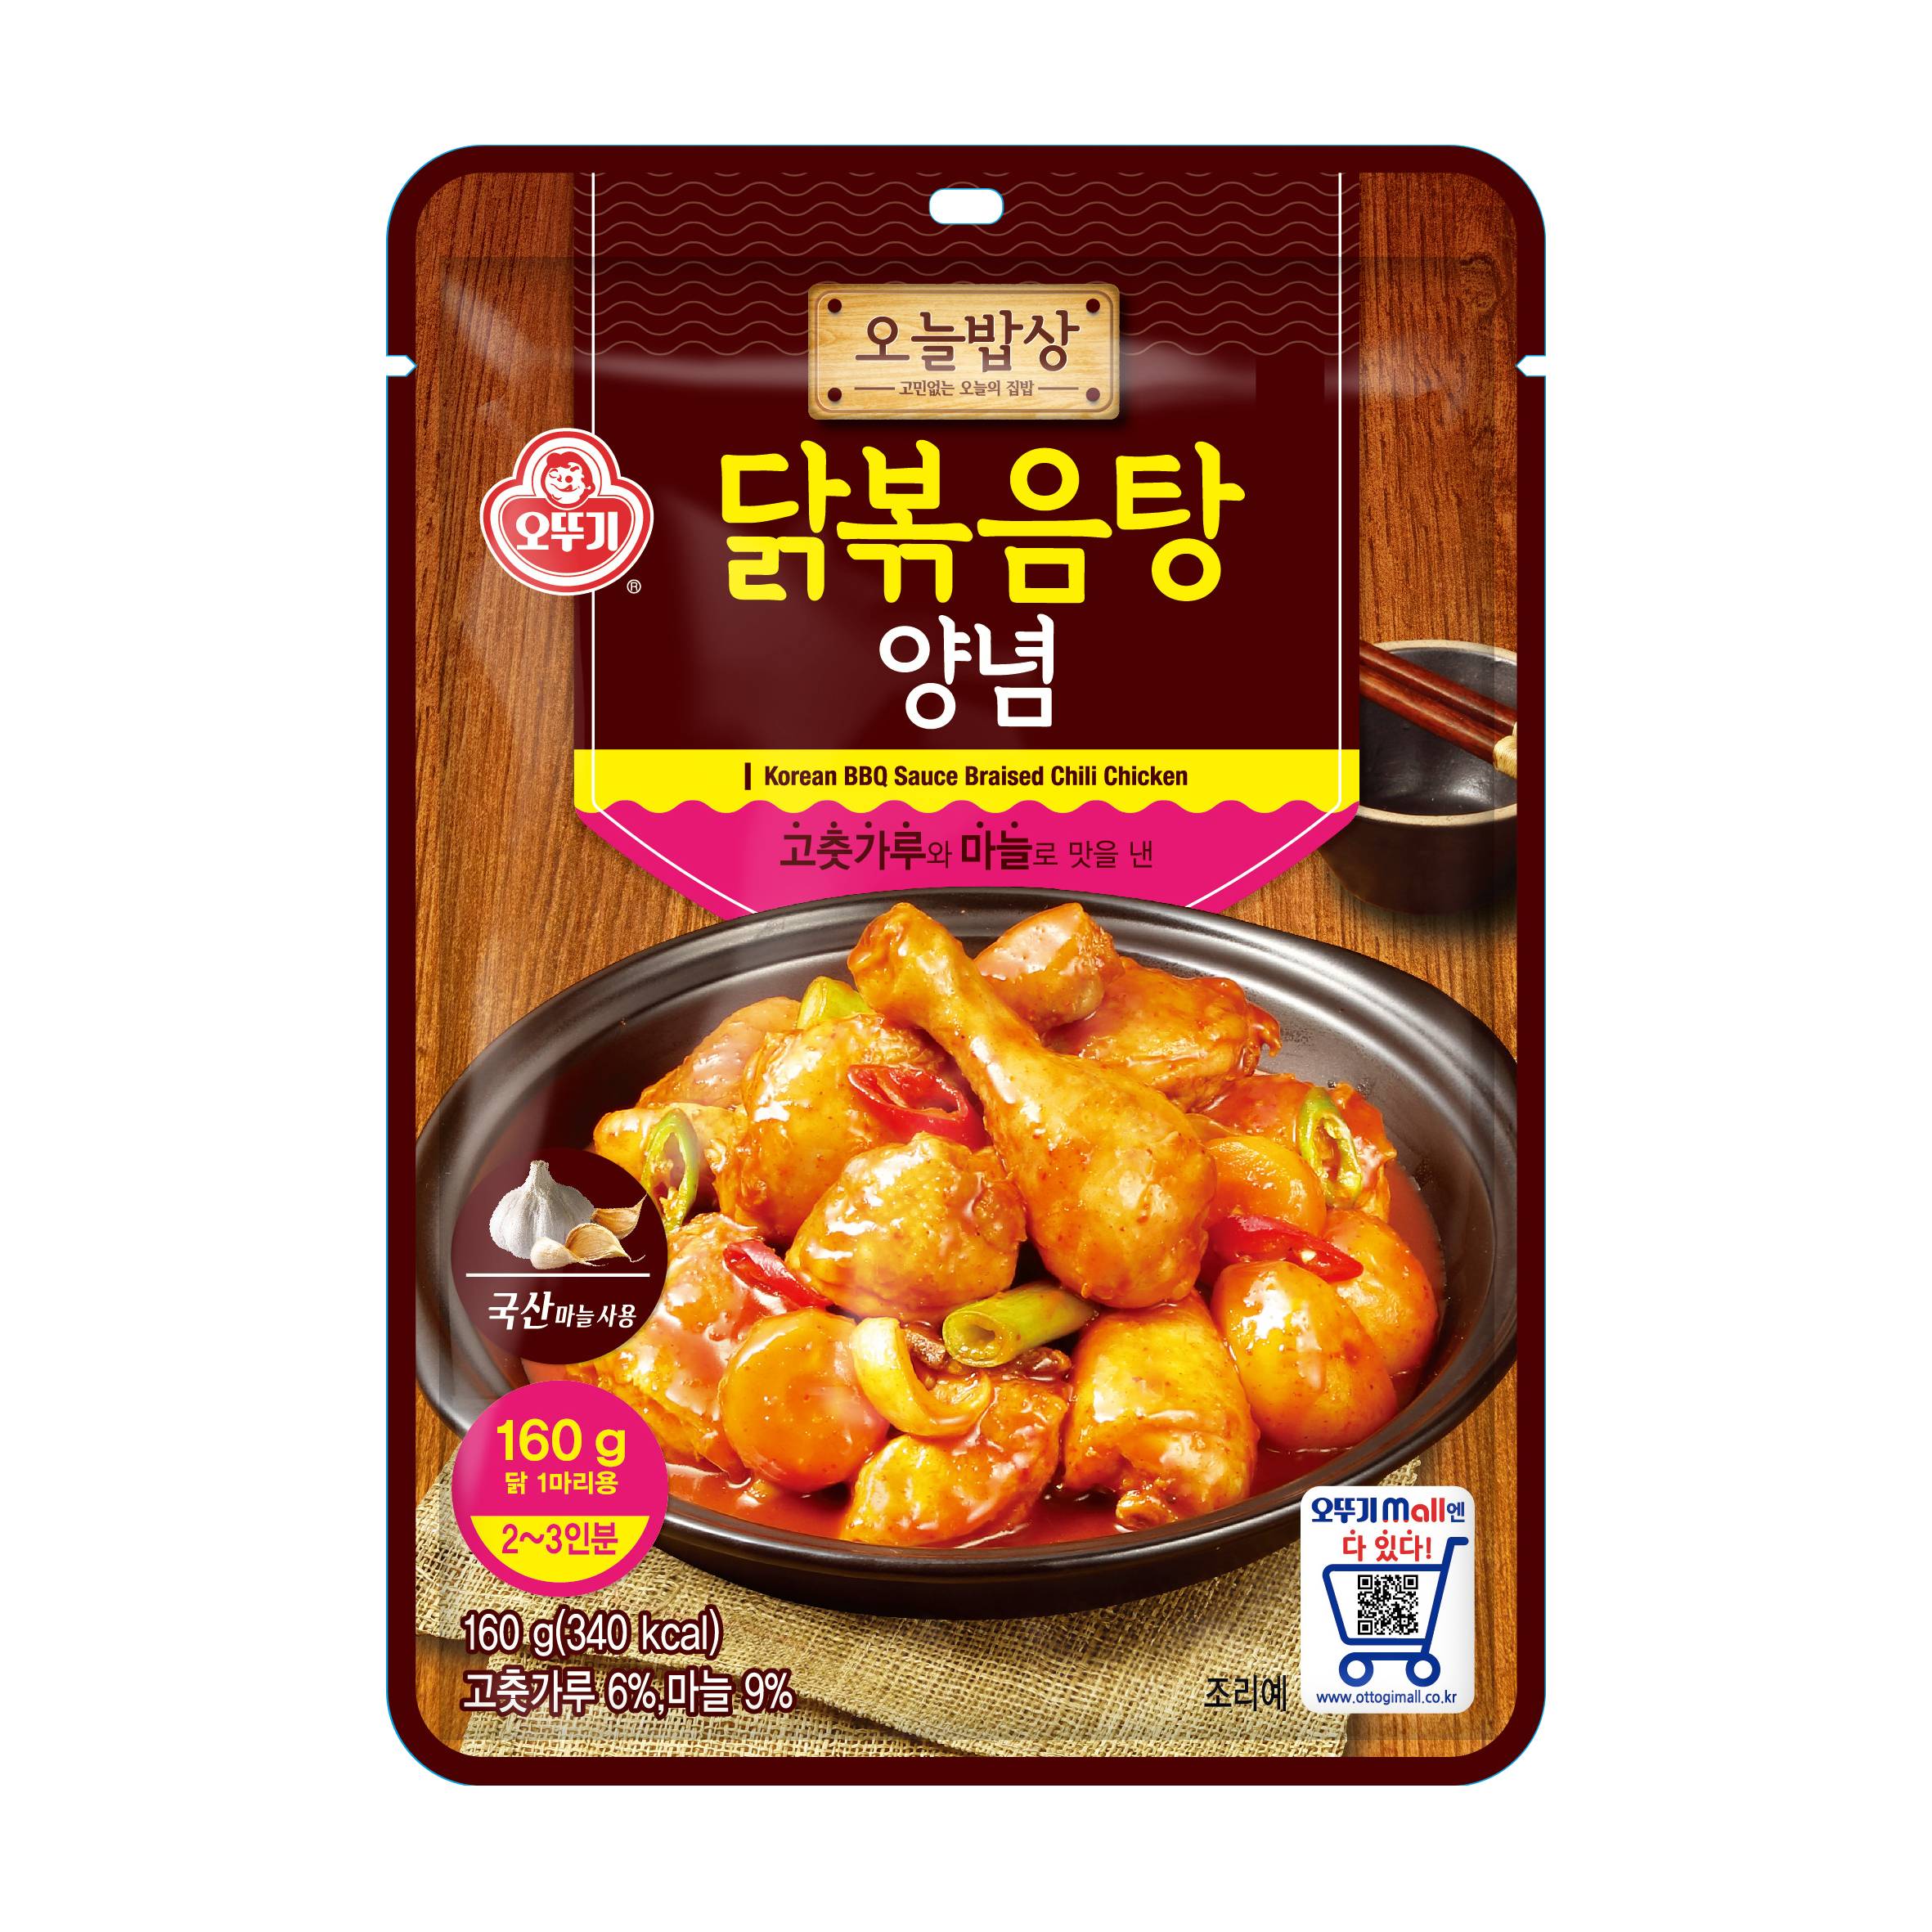 KOREAN BBQ SAUCE BRAISED CHILI CHICKEN